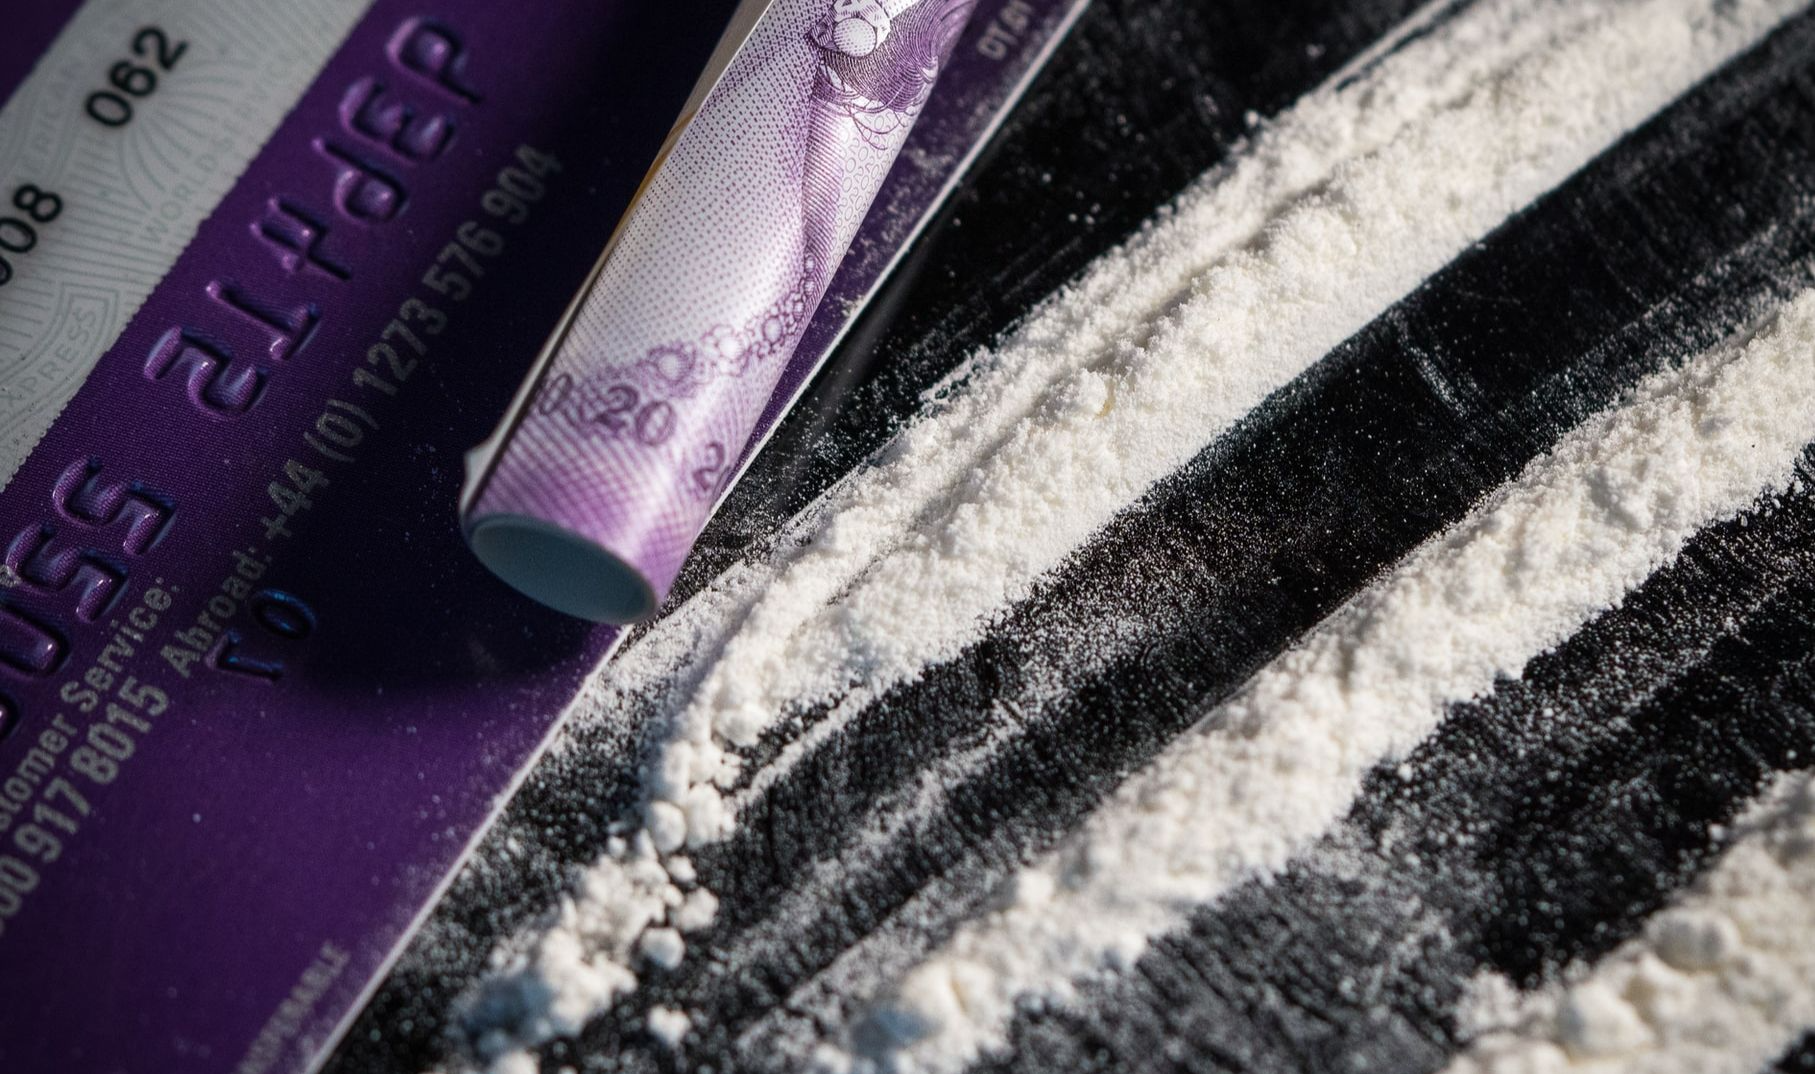 Venda e consumo de cocaína viram problema de saúde pública na Inglaterra